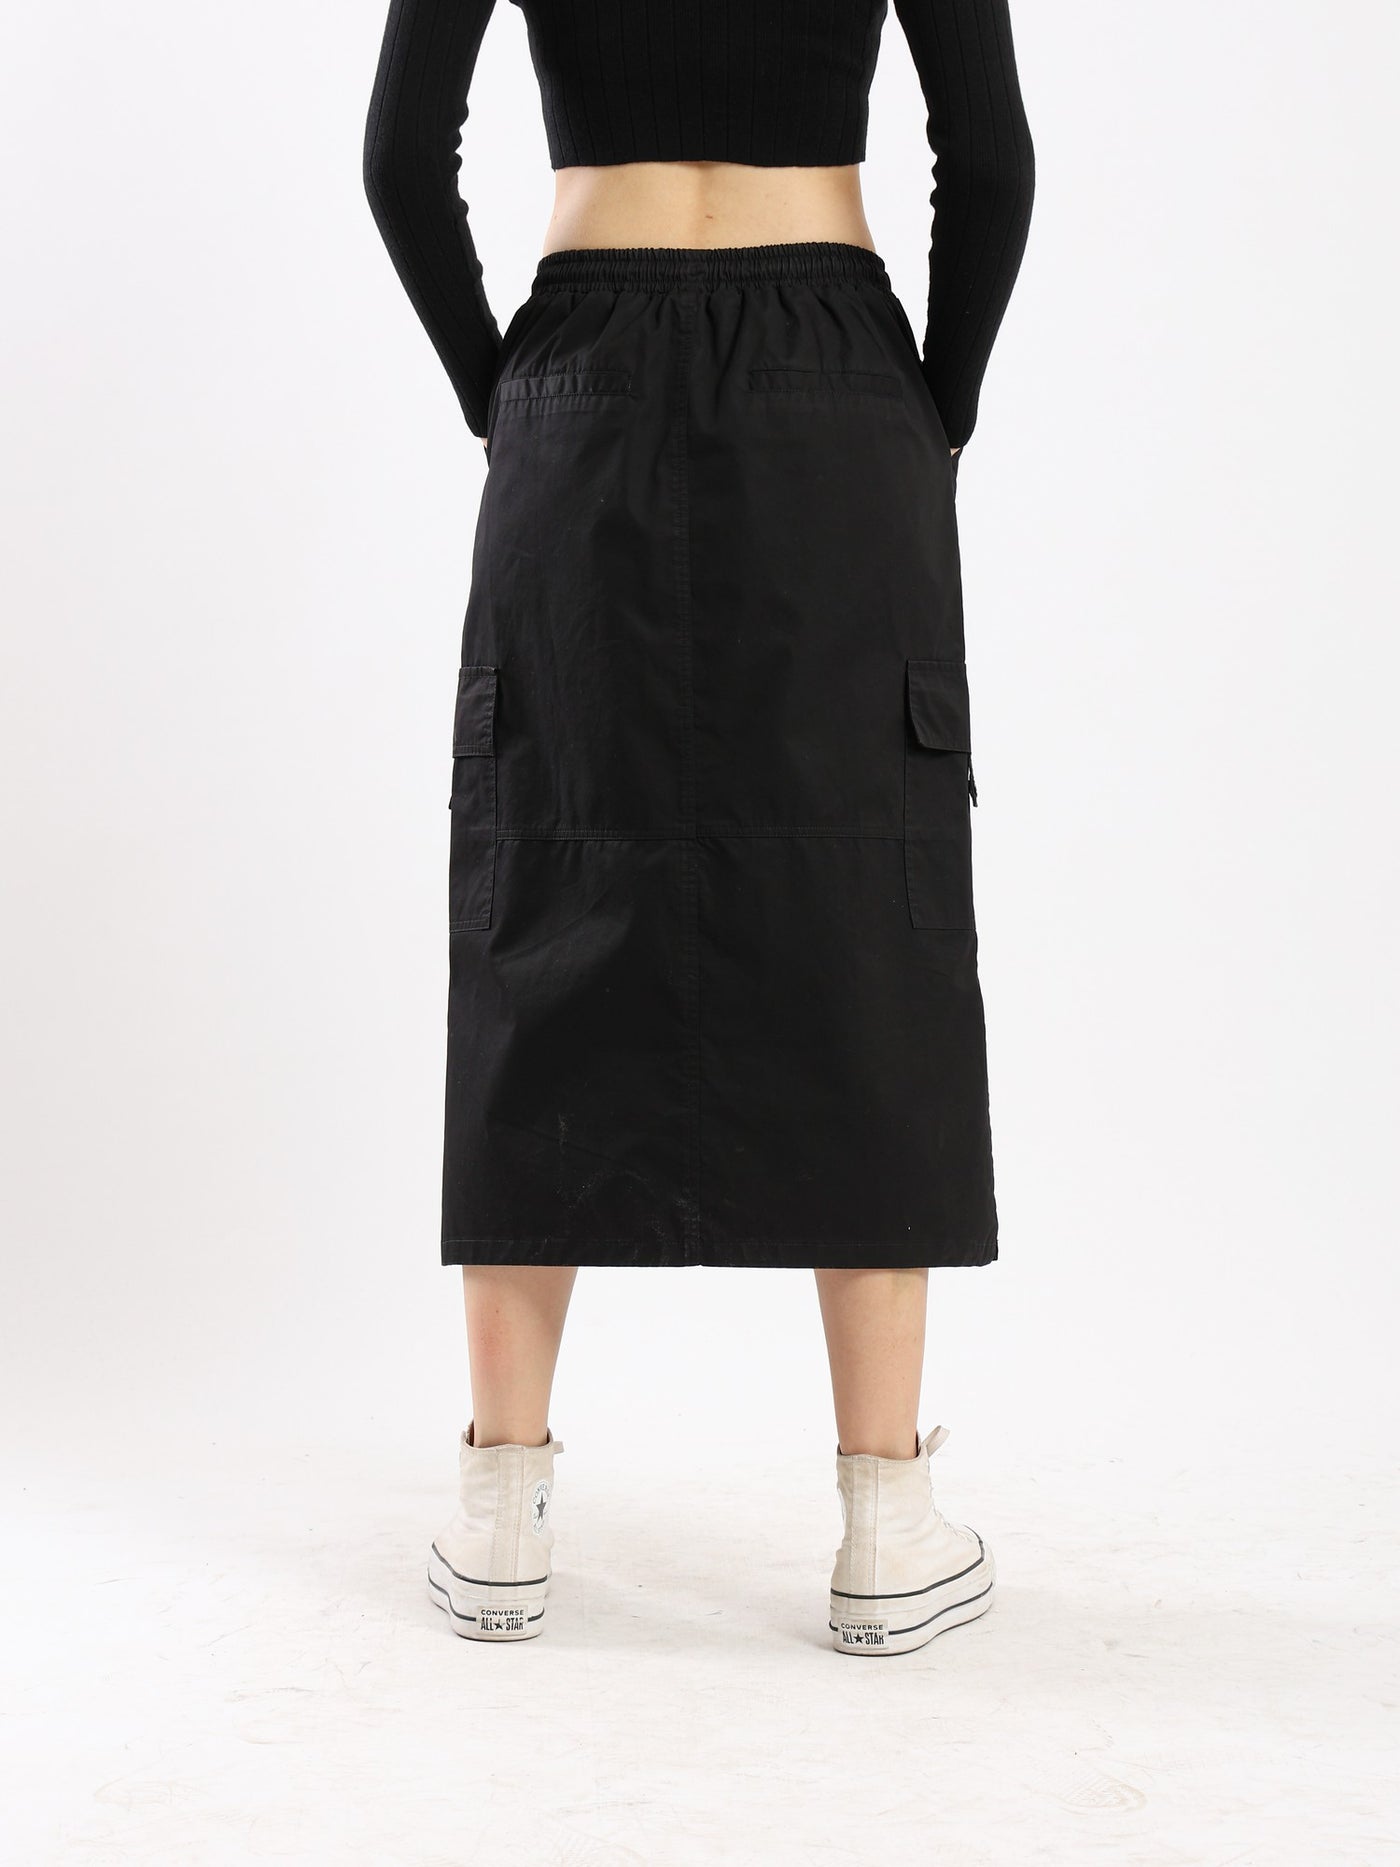 Skirt - Parachute Design - Slit Sides